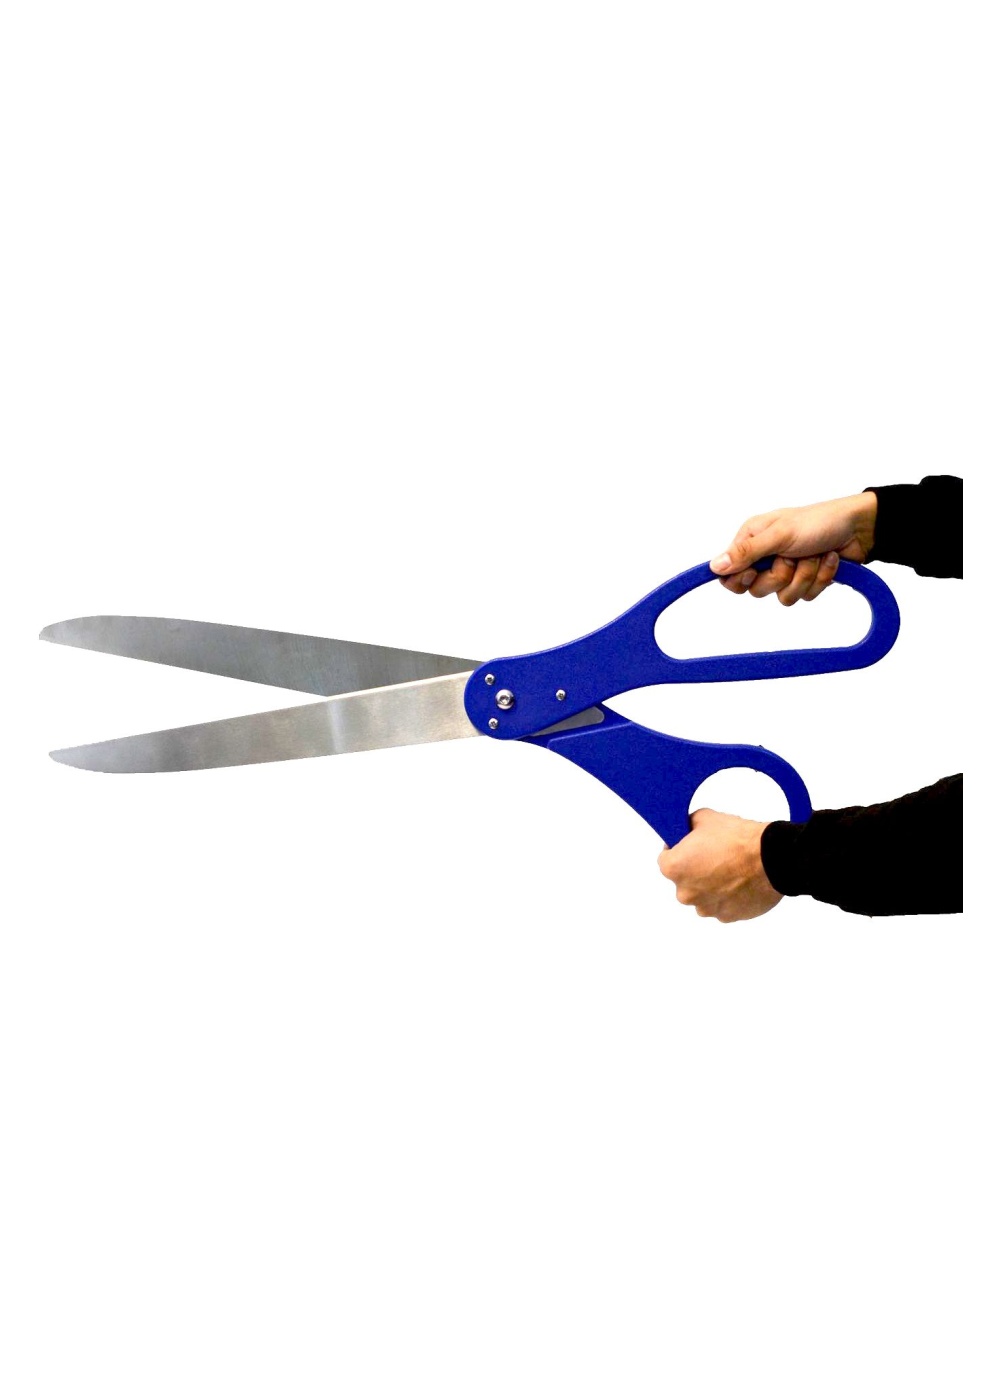 https://img.wondercostumes.com/imgzoom/prod2015/30-inch-blue-ribbon-cutting-scissors-5.jpg